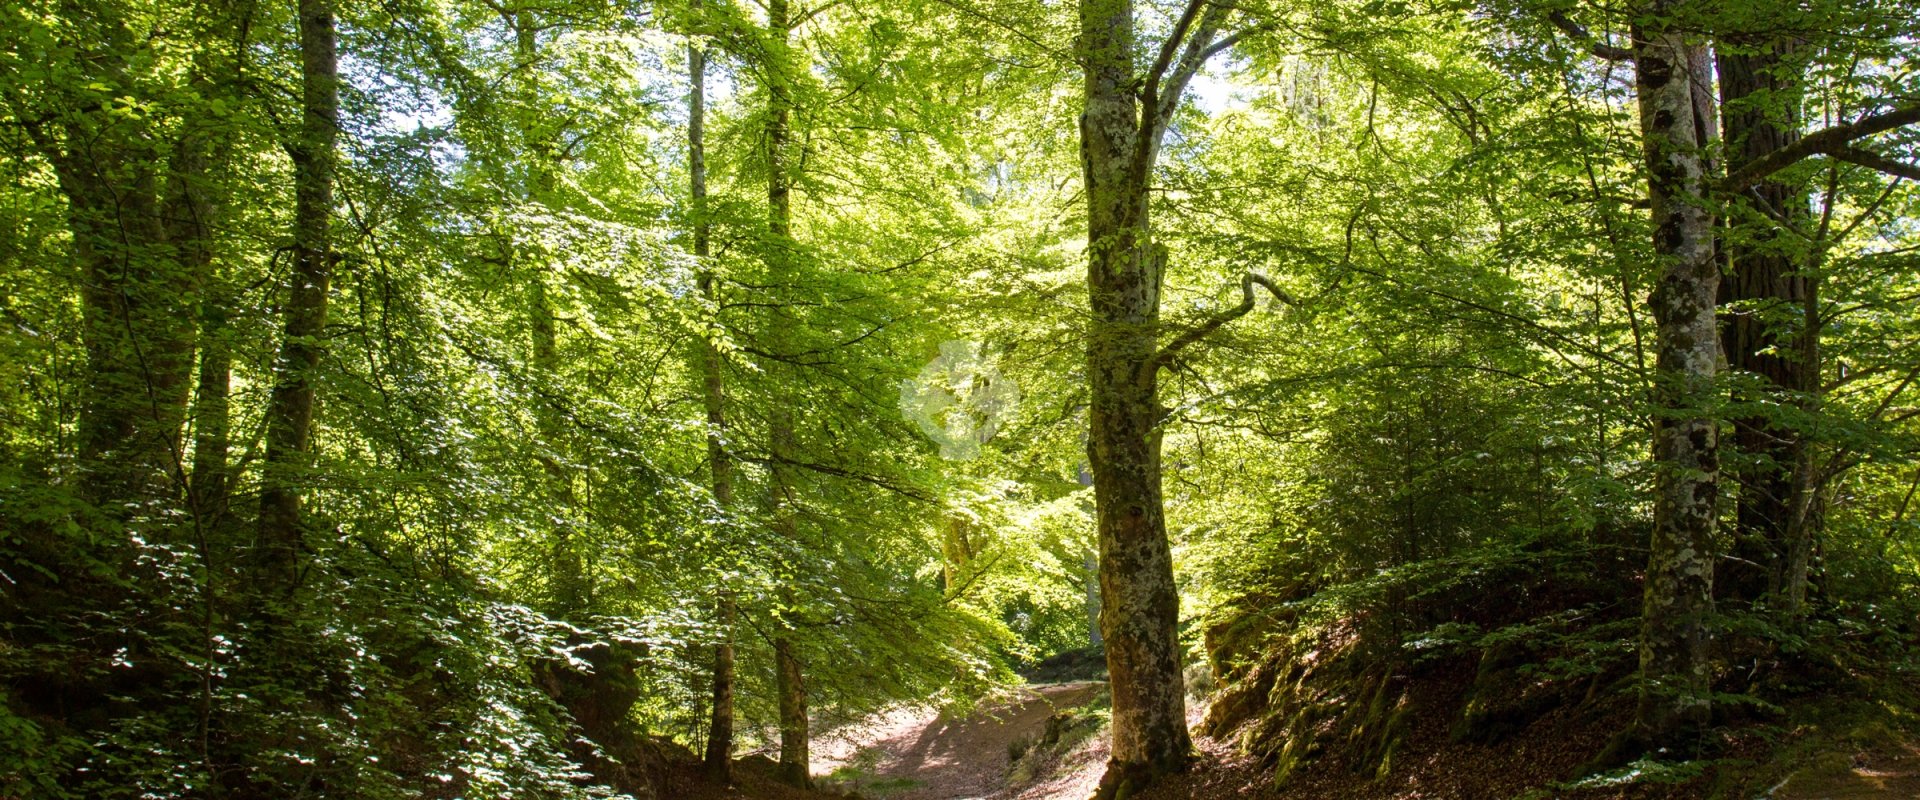 Beech grove, Findhorn Gorge